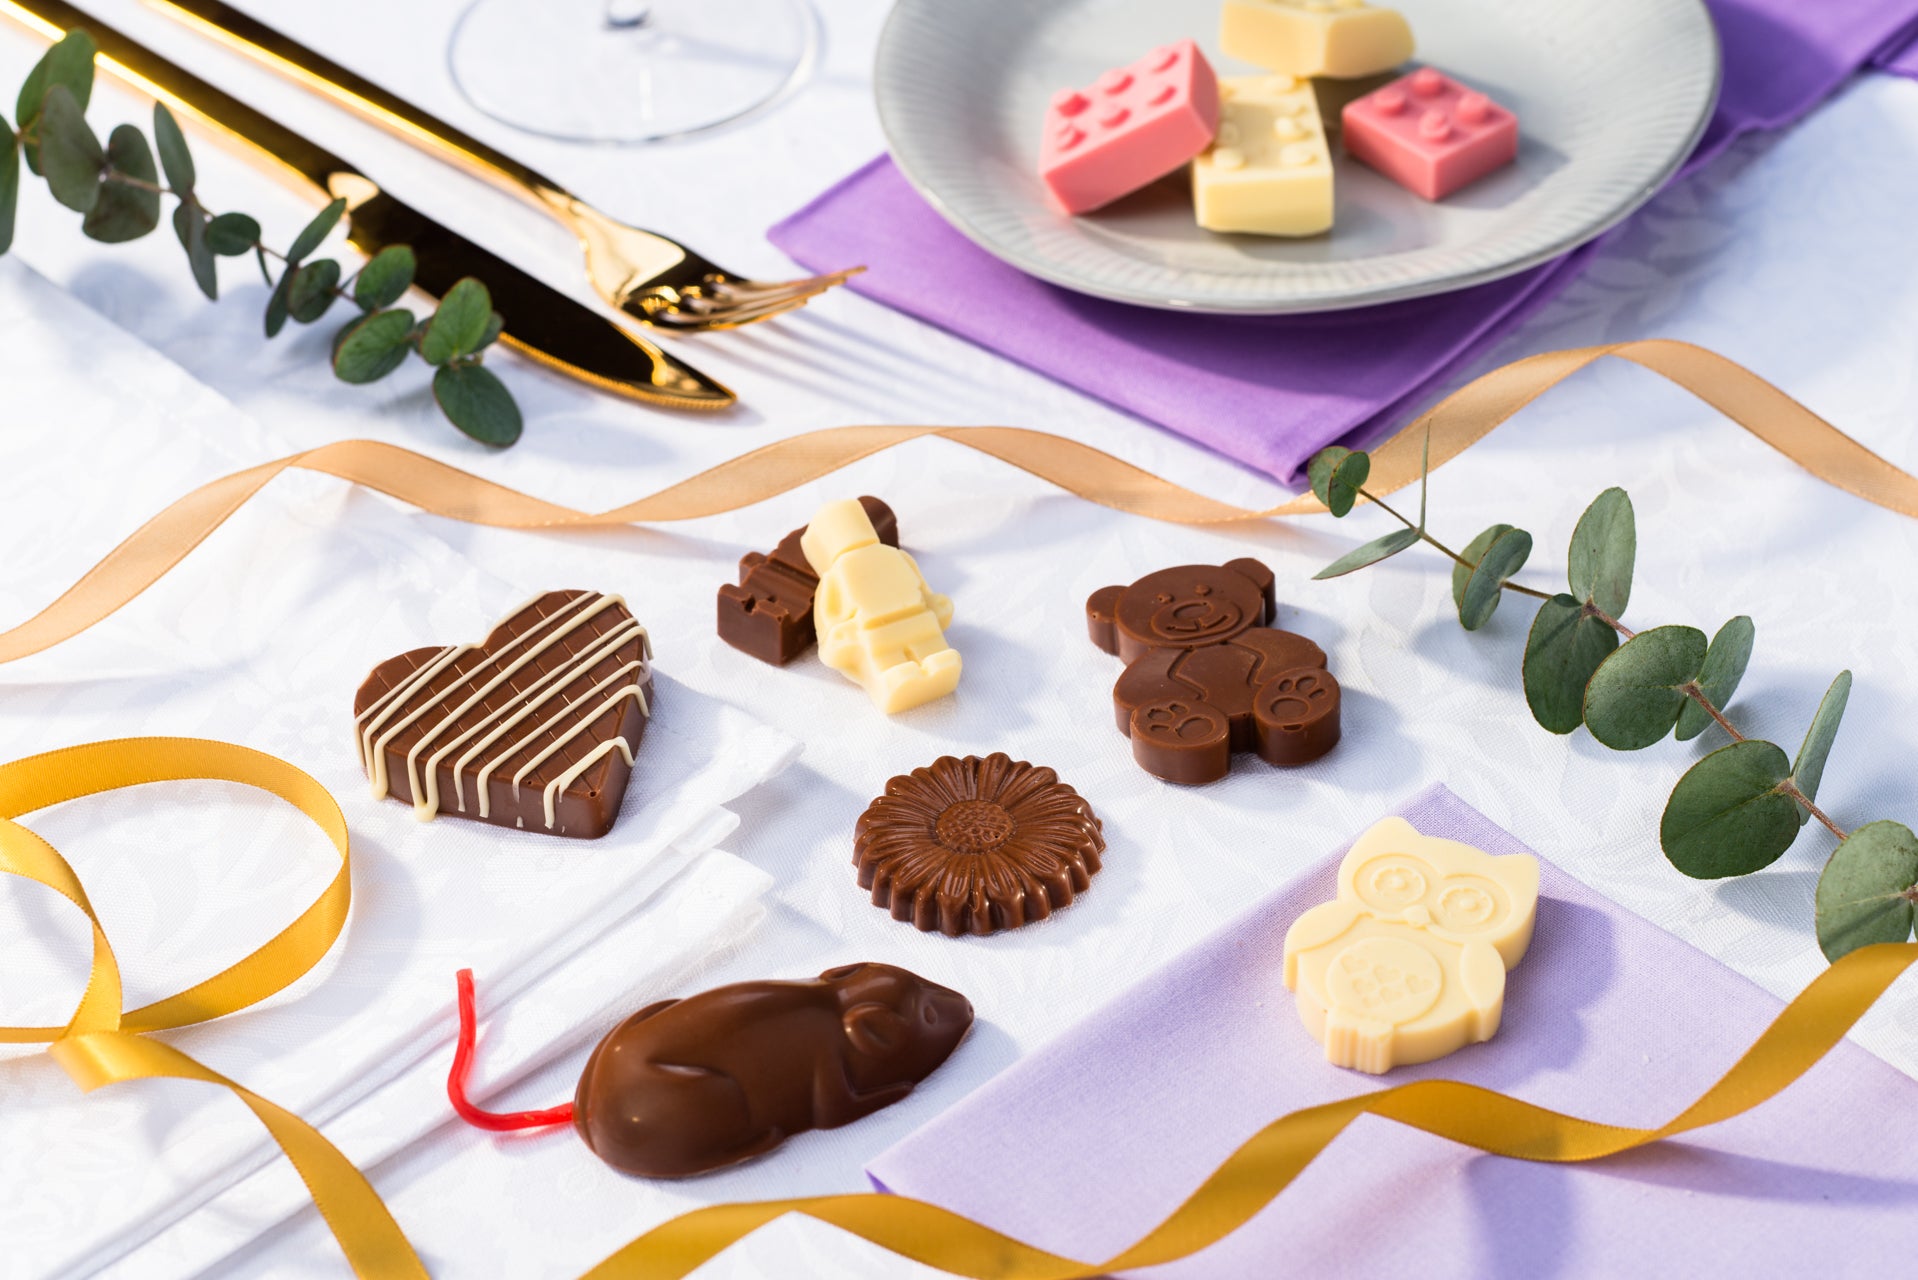 Selection of chocolate mice, chocolate bears and chocolate hearts